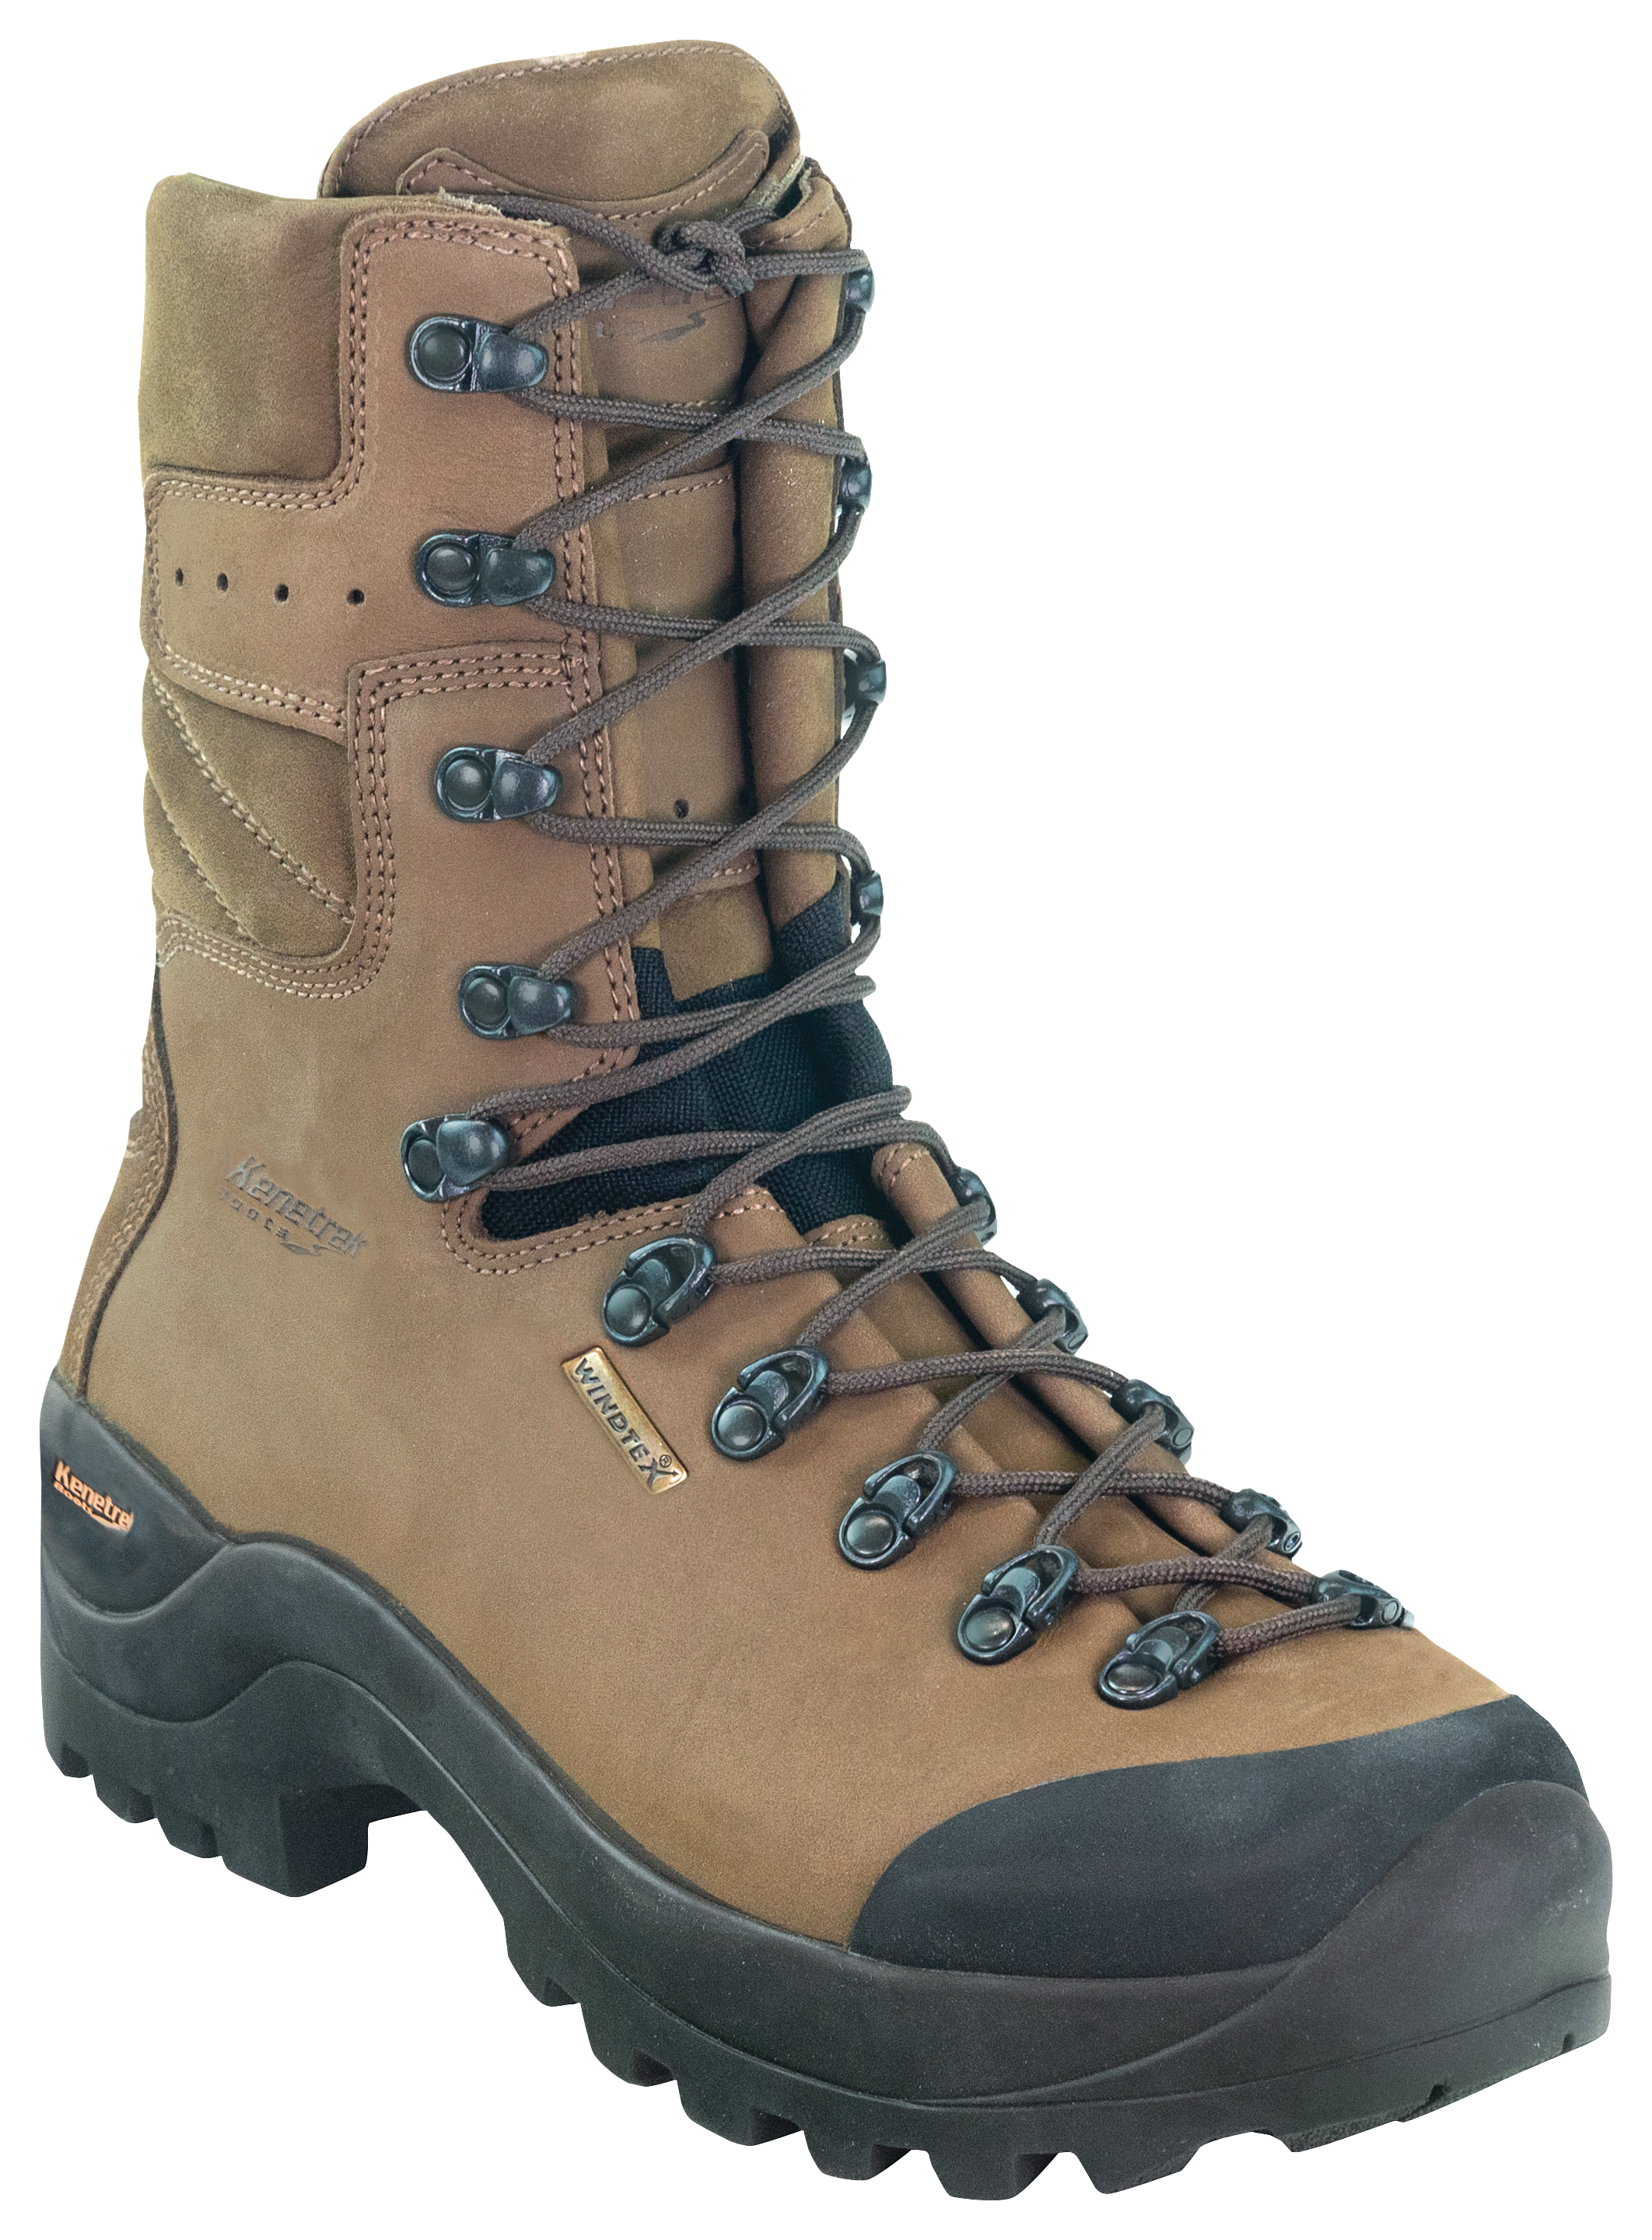 Kenetrek Mountain Guide Waterproof Hunting Boots for Men - Brown - 12M